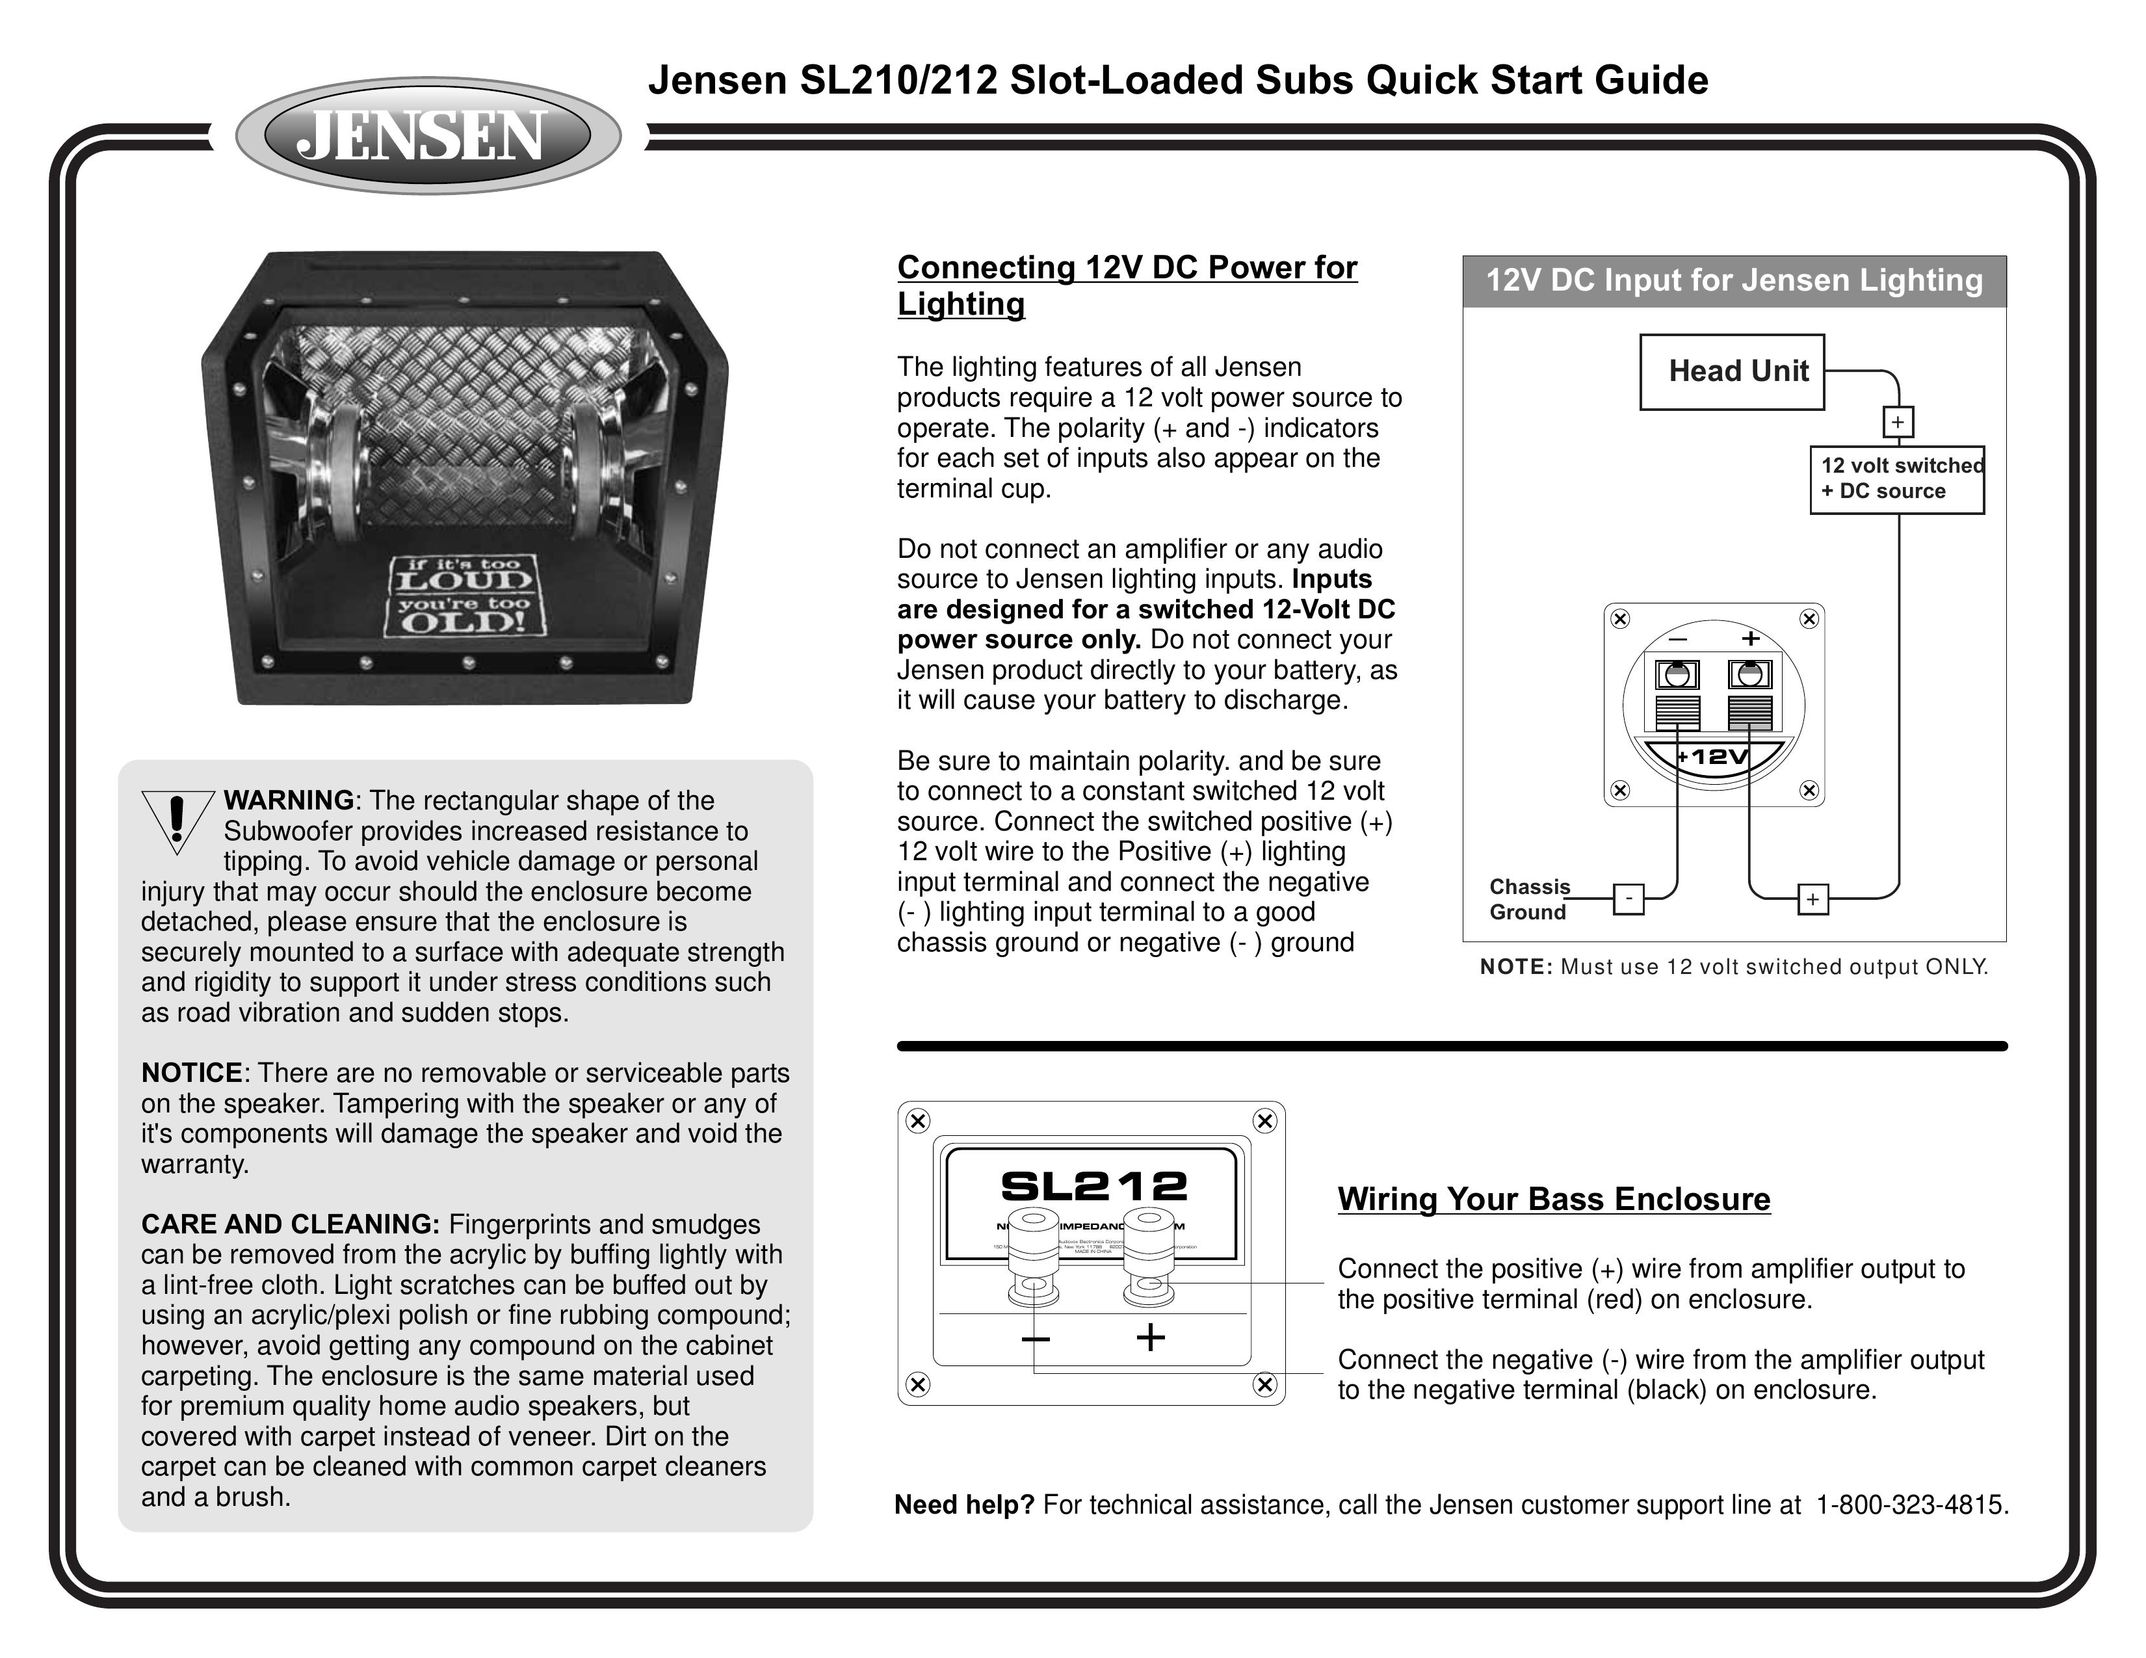 Jensen SL212 Speaker User Manual